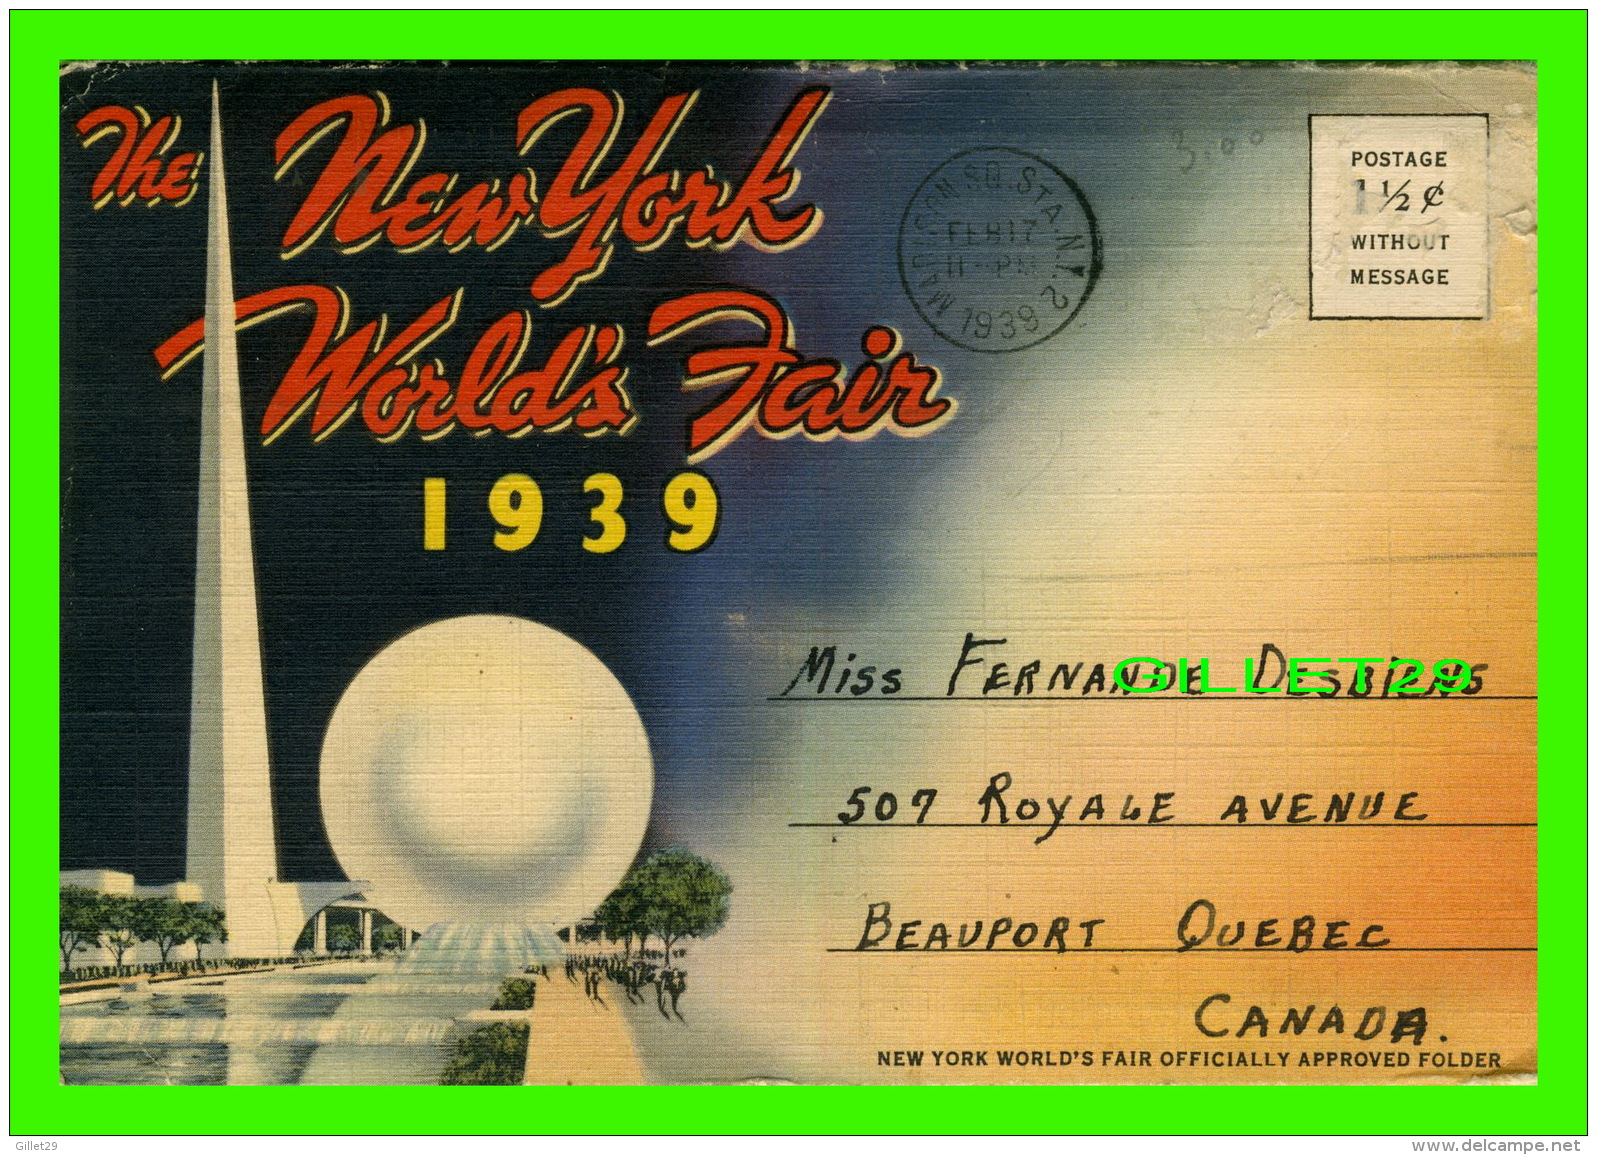 NEW YORK CITY, NY - NEW YORK WORLD'S FAIR FOLDER IN 1939 - TRAVEL IN 1939 - - Expositions